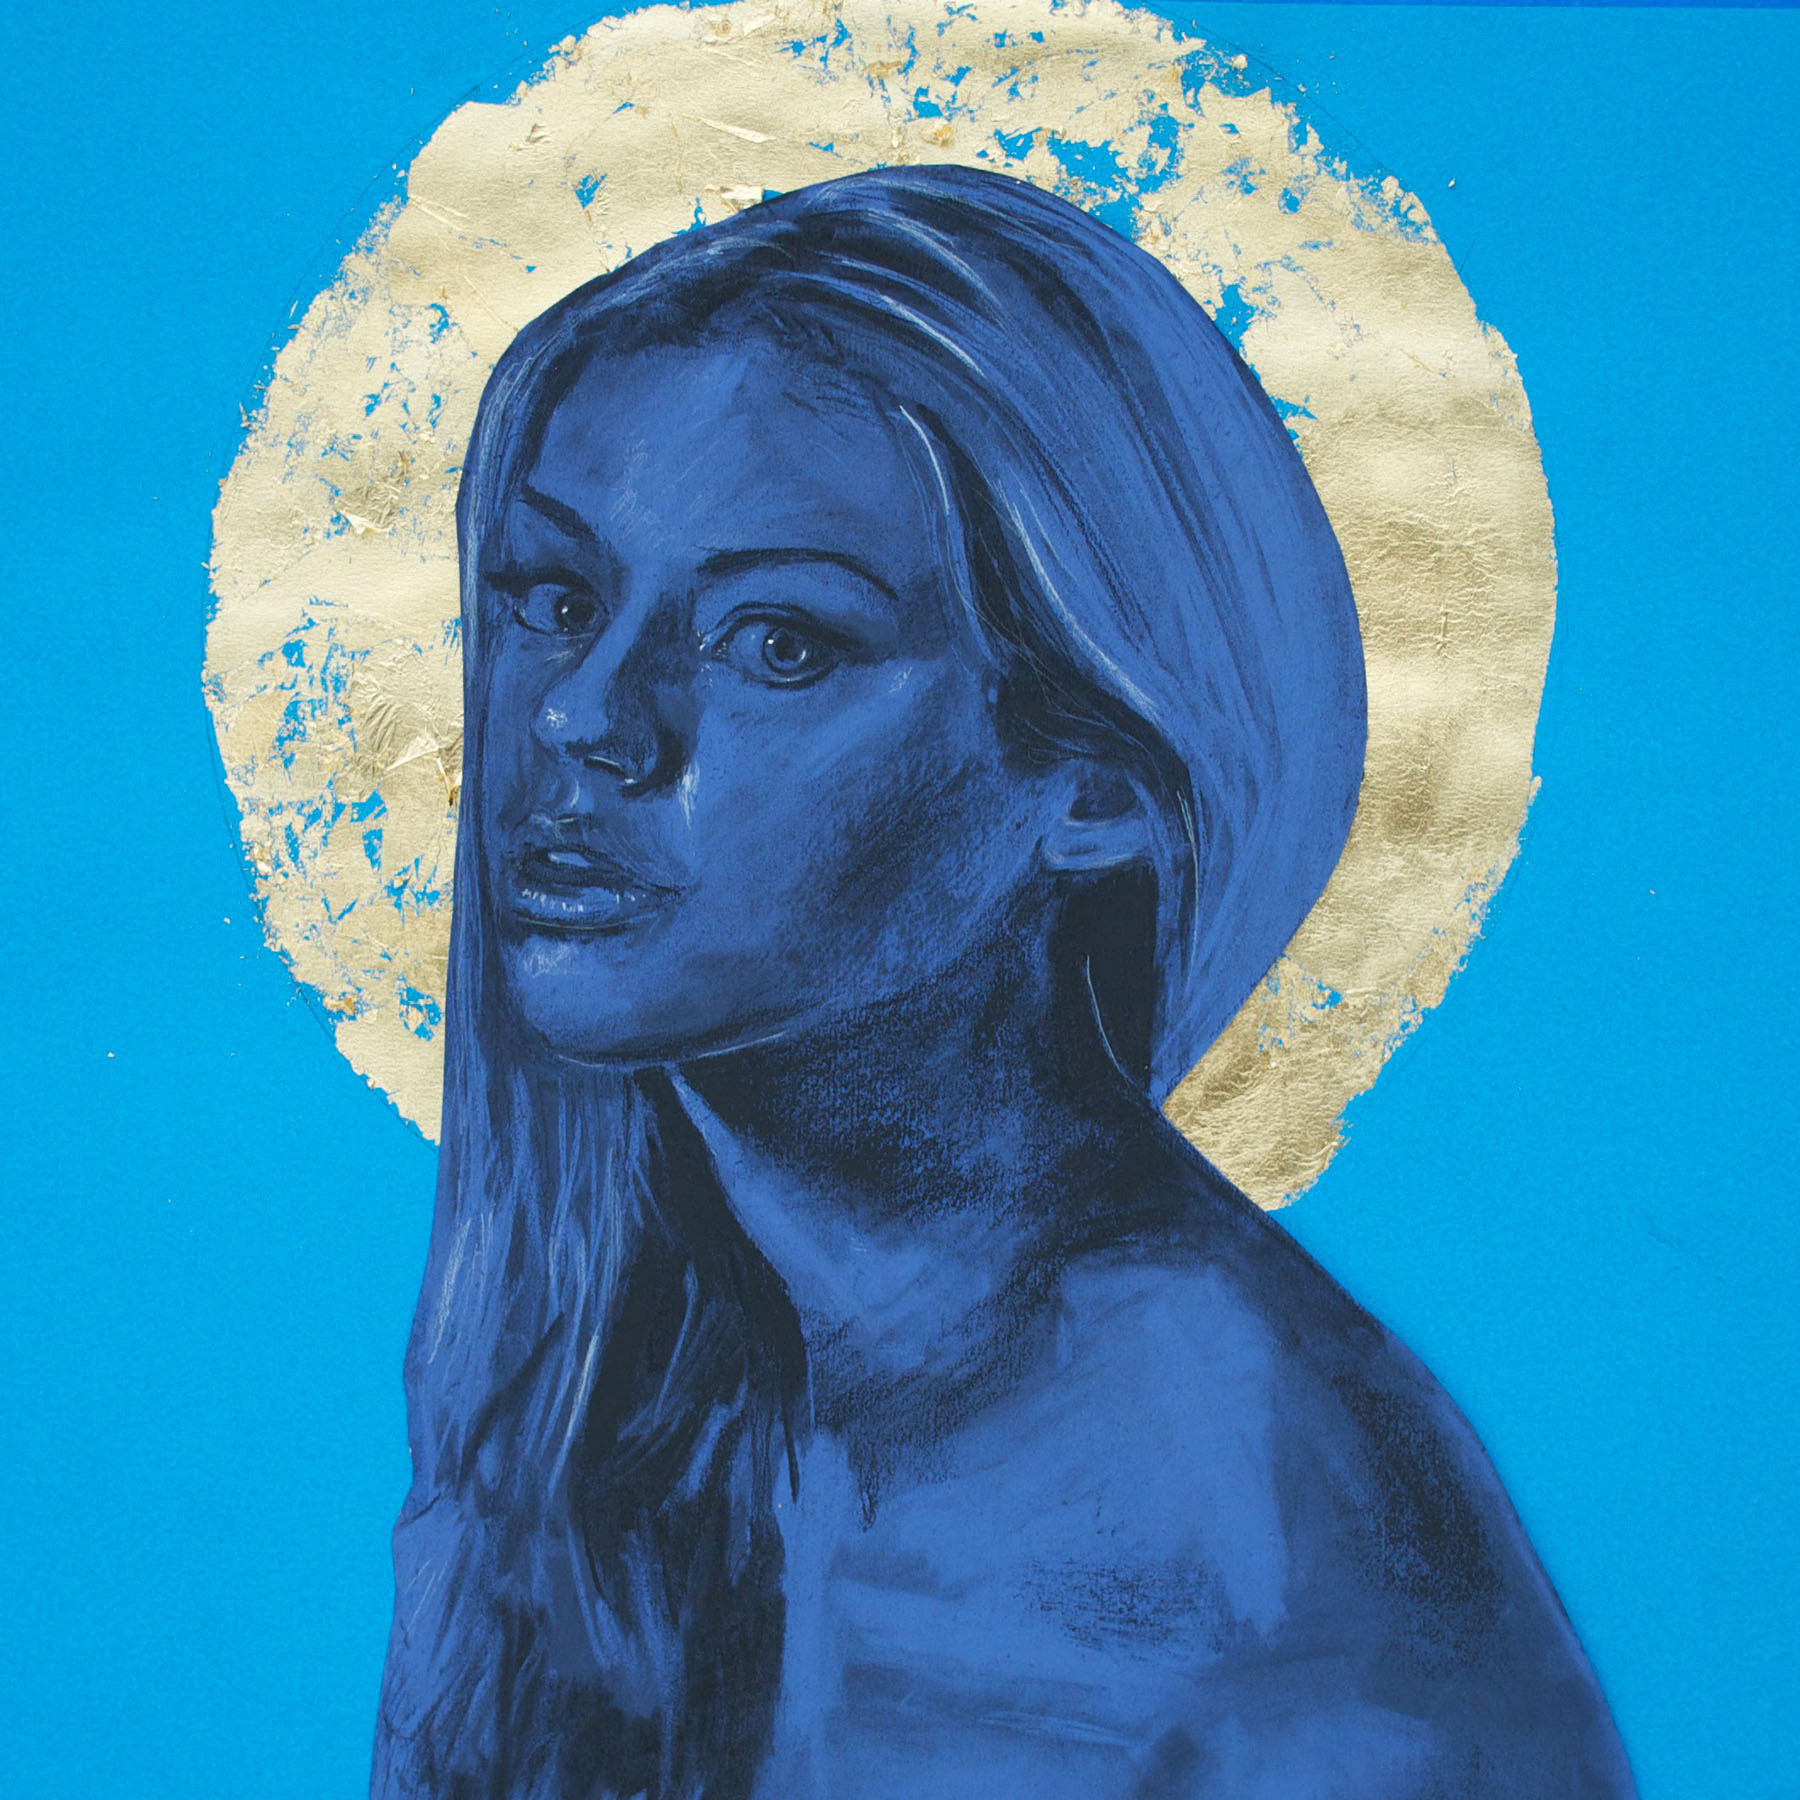 Alaina-Johnson-Orthodox-Charcoal-Portrait-on-Blue-paper-and-Gold-leaf-copy